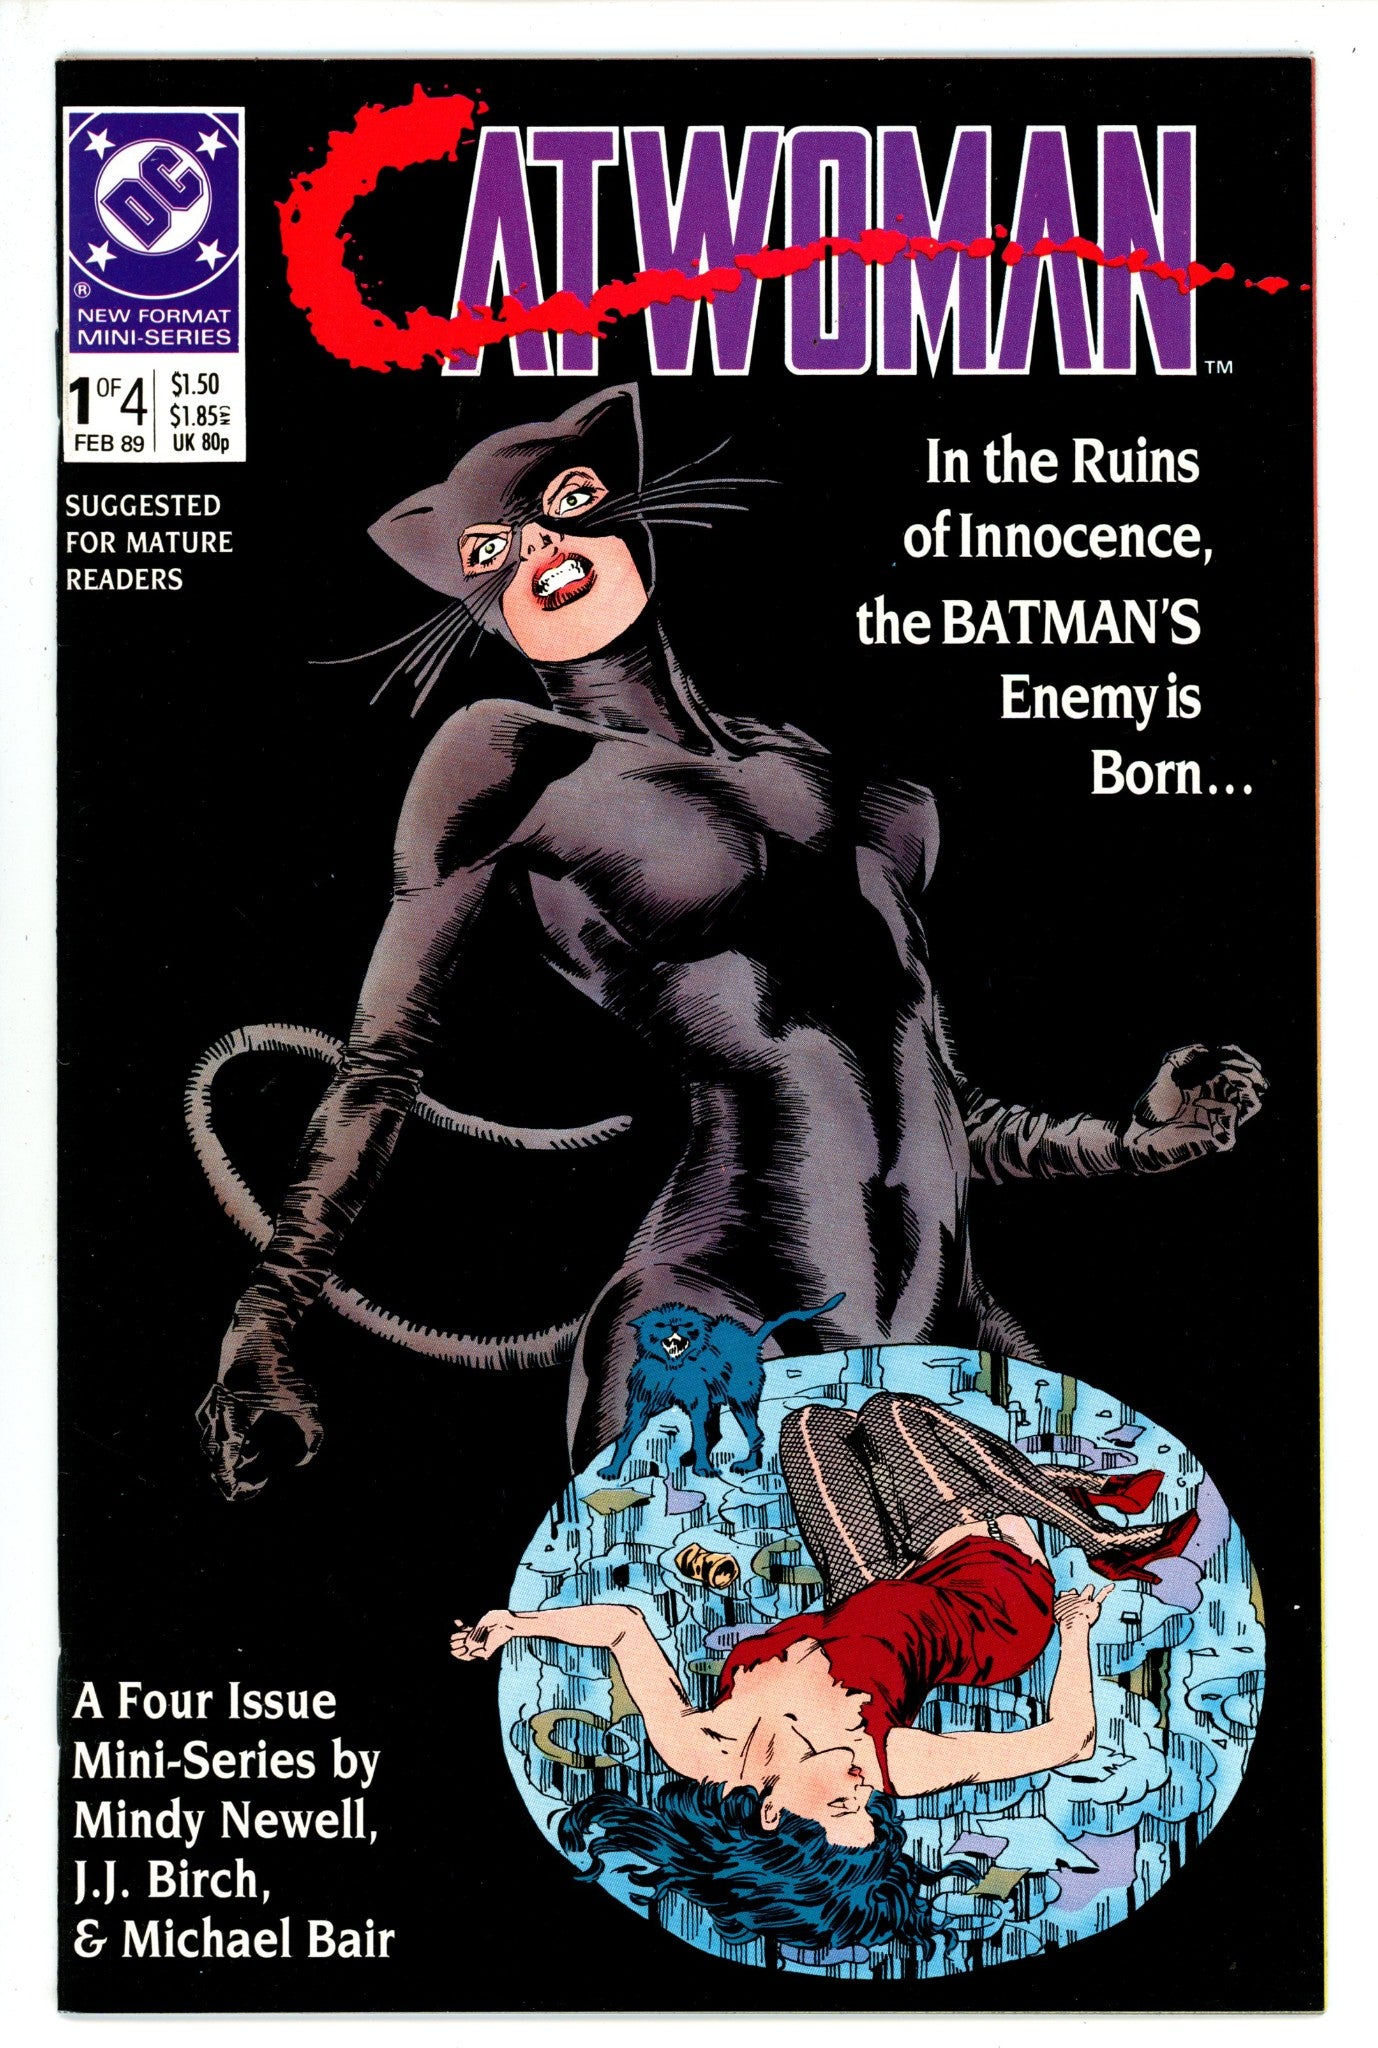 Catwoman Vol 1 1 (1988)